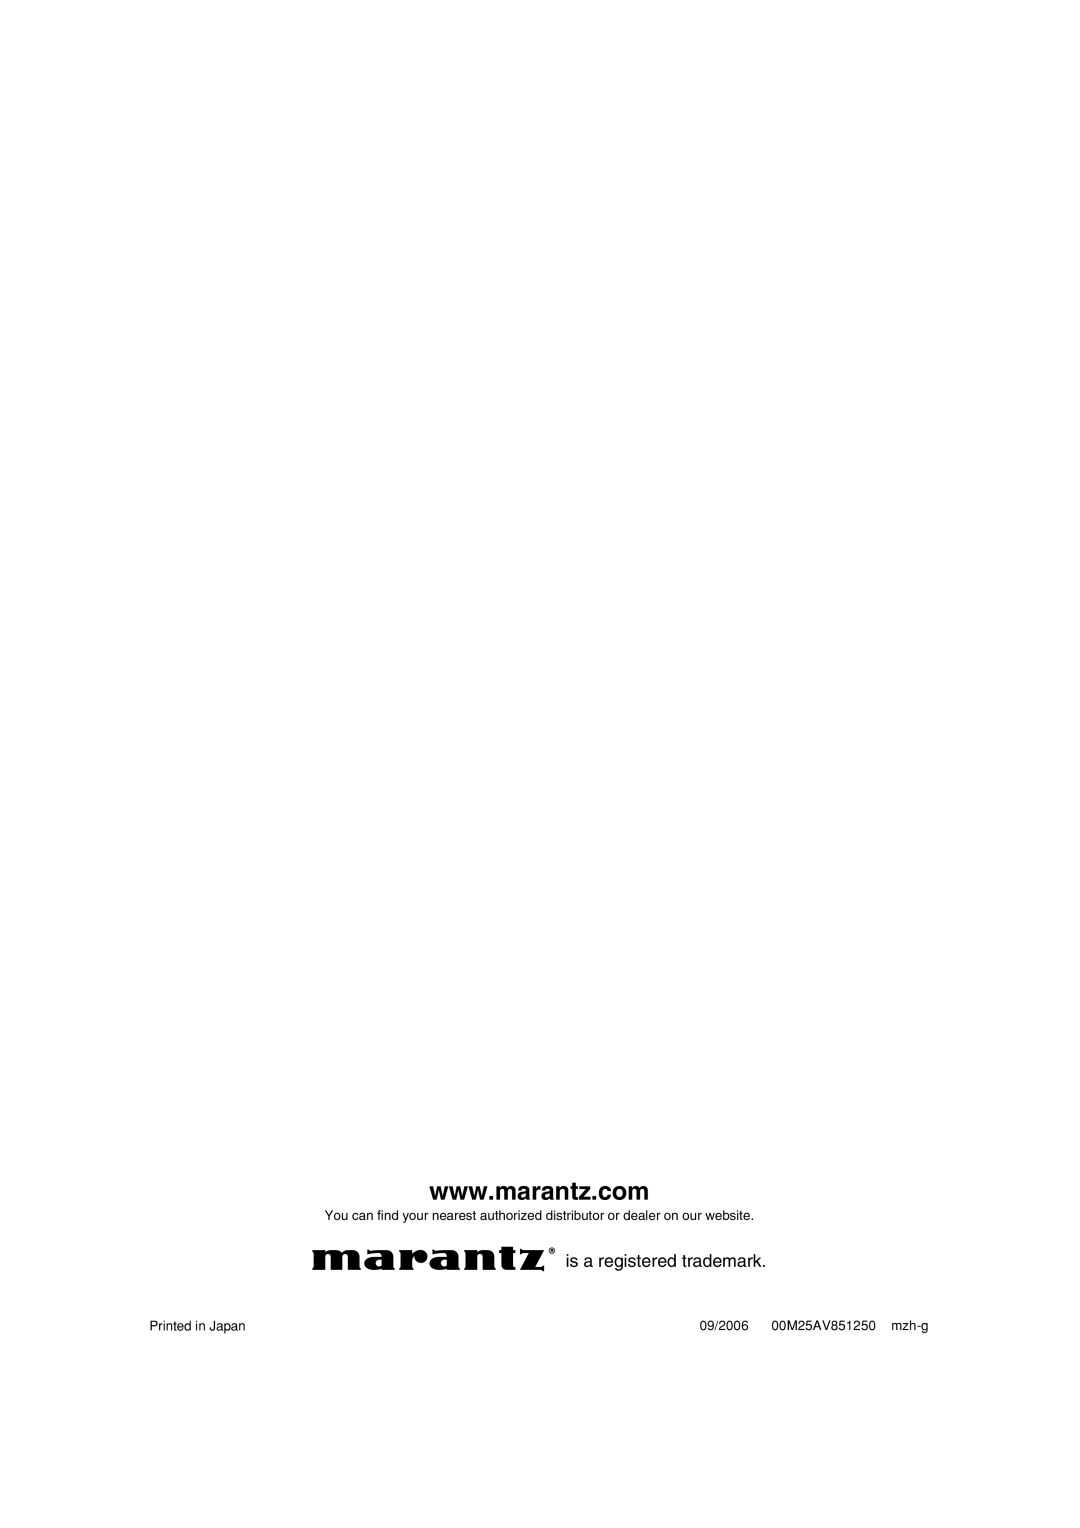 Marantz PD5001 manual is a registered trademark, Printed in Japan, 09/2006 00M25AV851250 mzh-g 